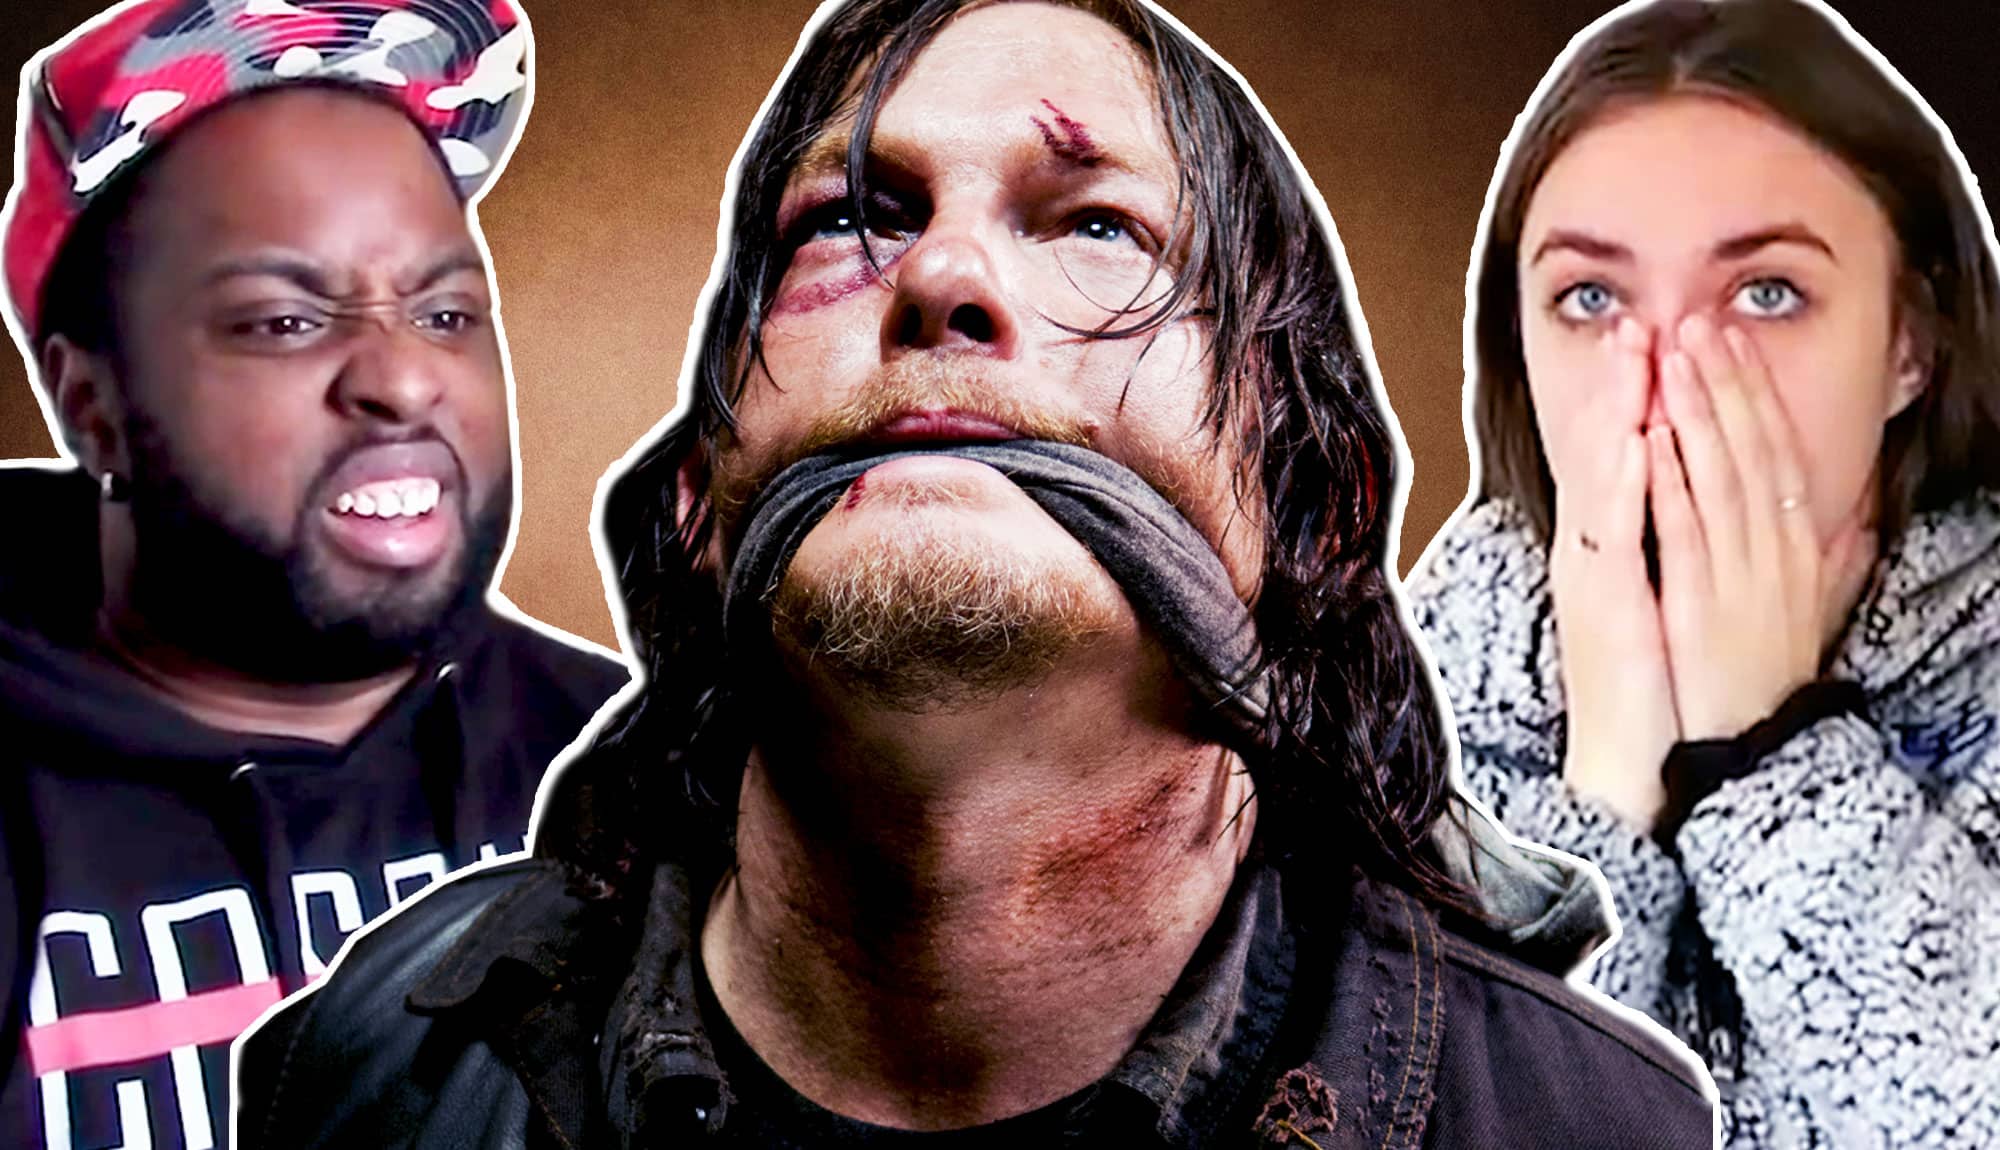 Fans React To The Walking Dead Season 5 Episode 1: “No Sanctuary”